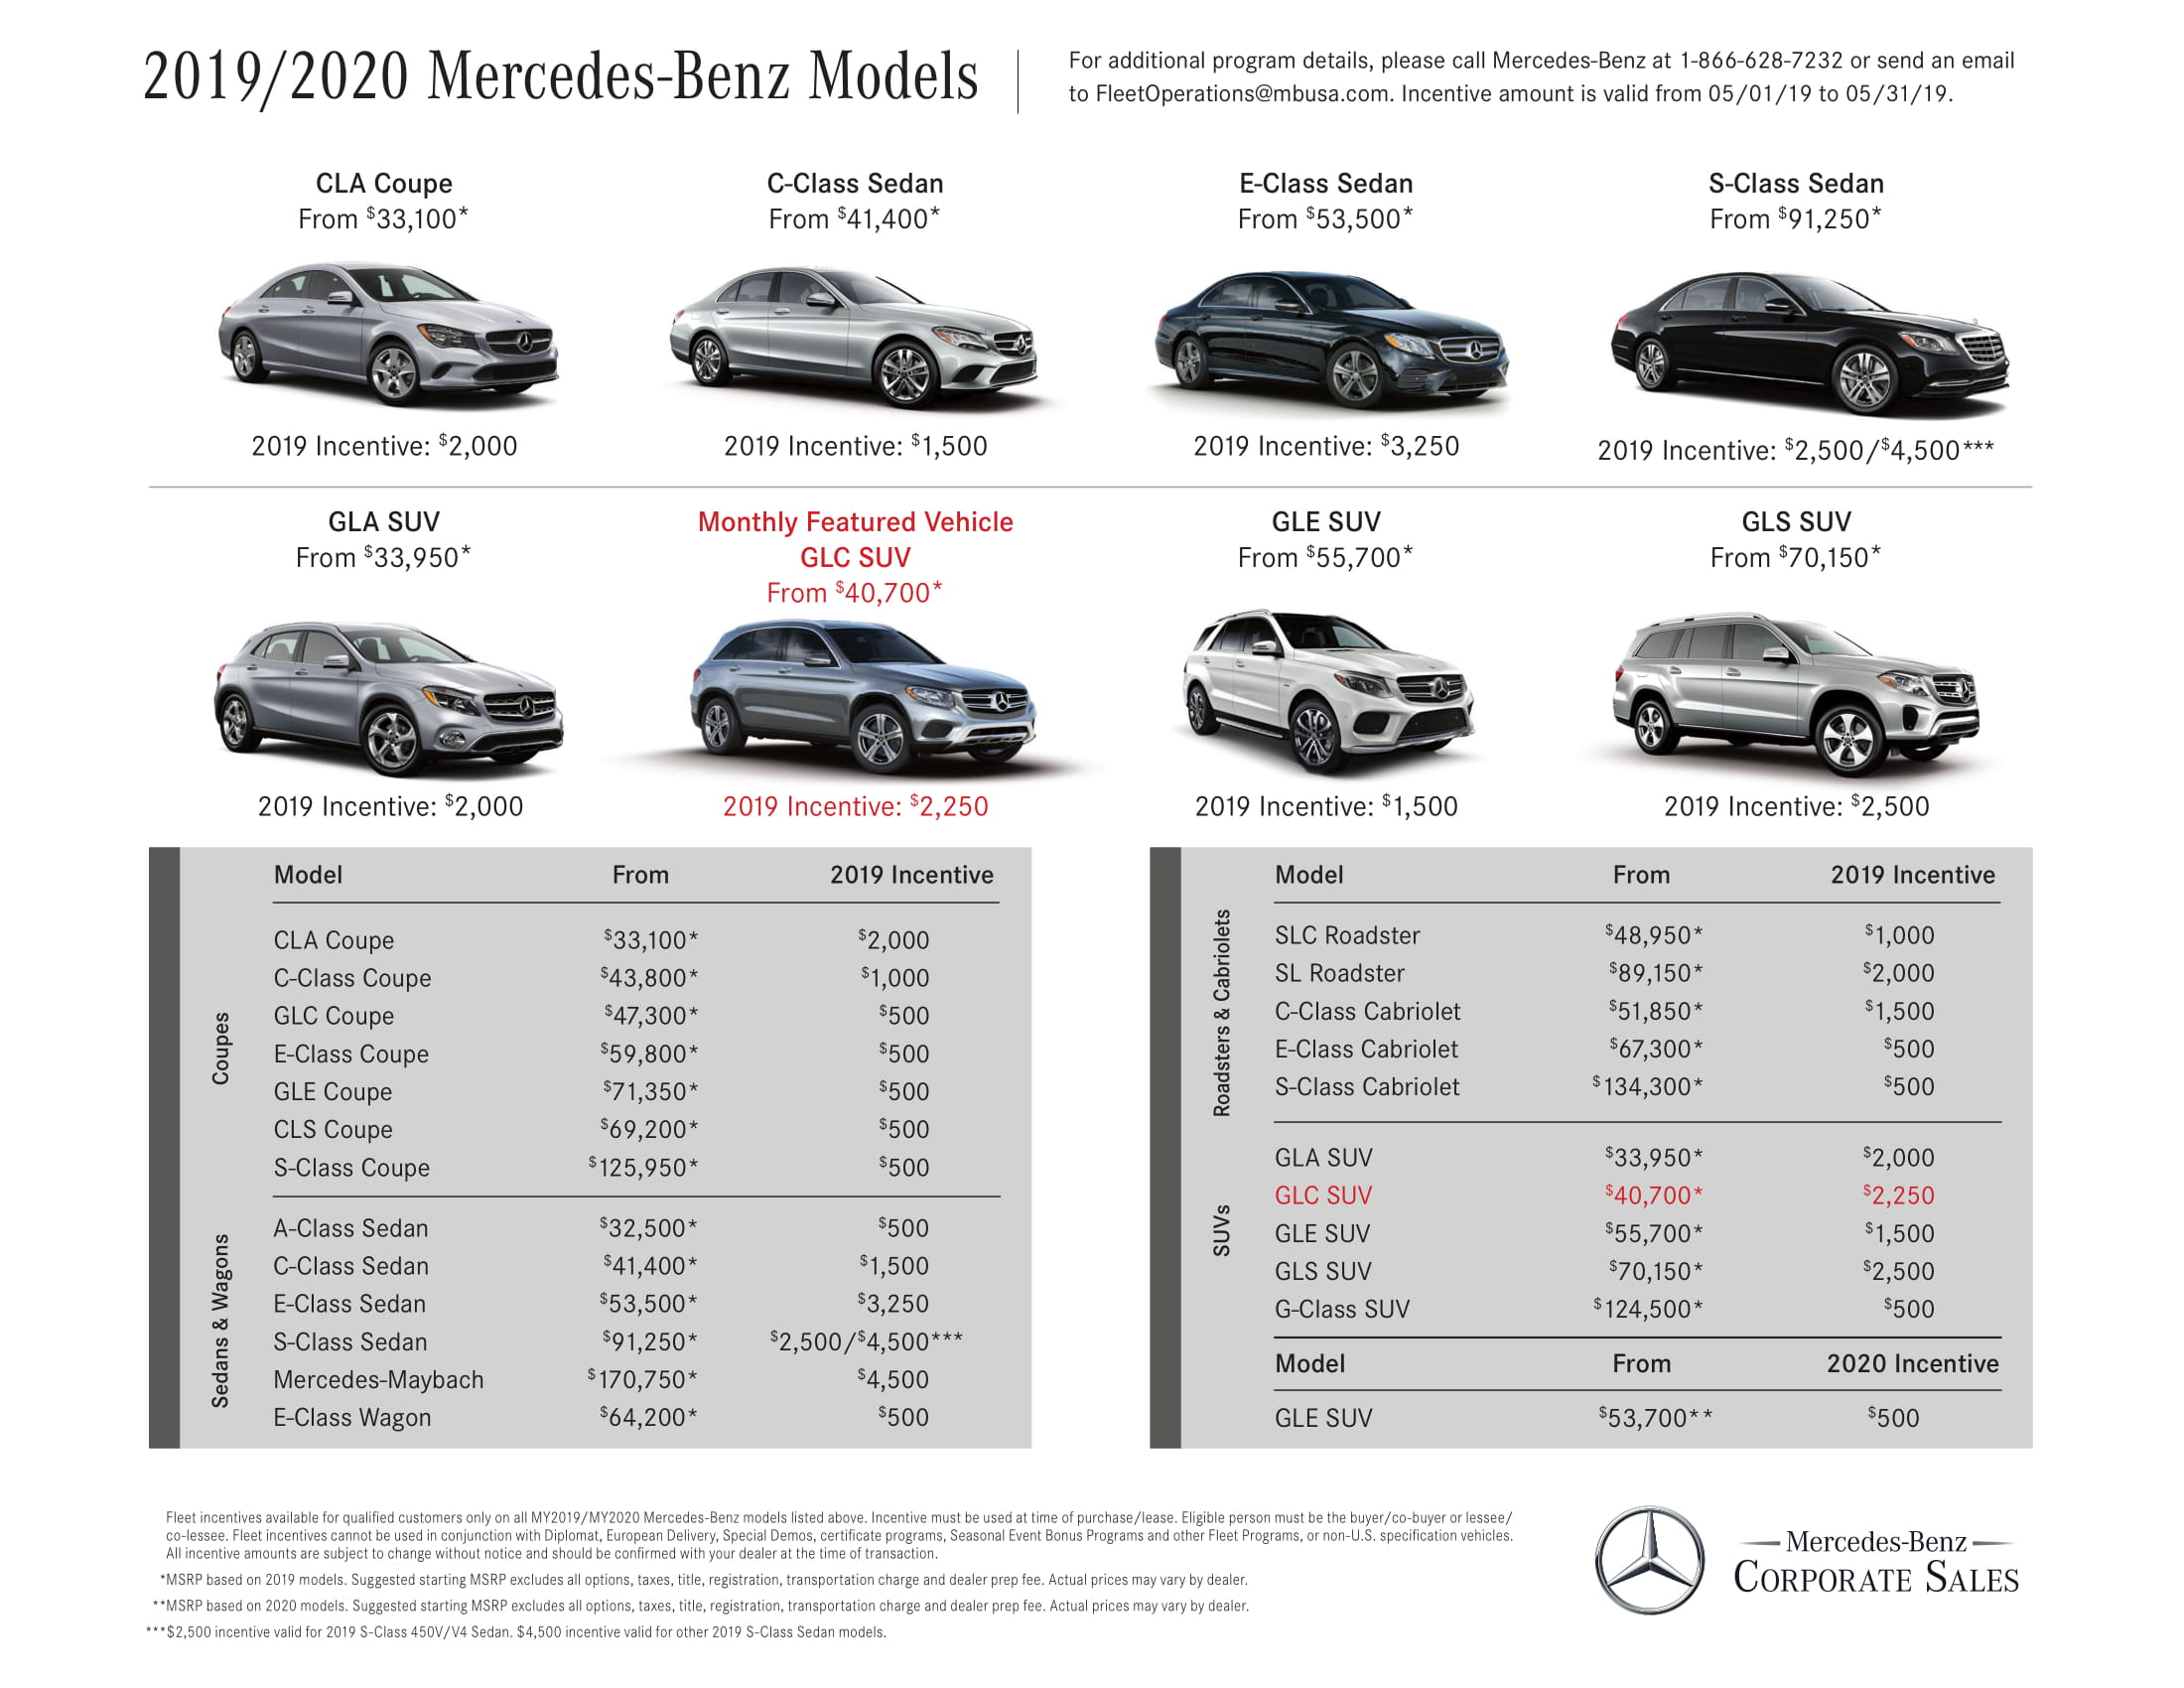 Fleet Sales Program Fleet Services From Mercedes Mercedes Benz